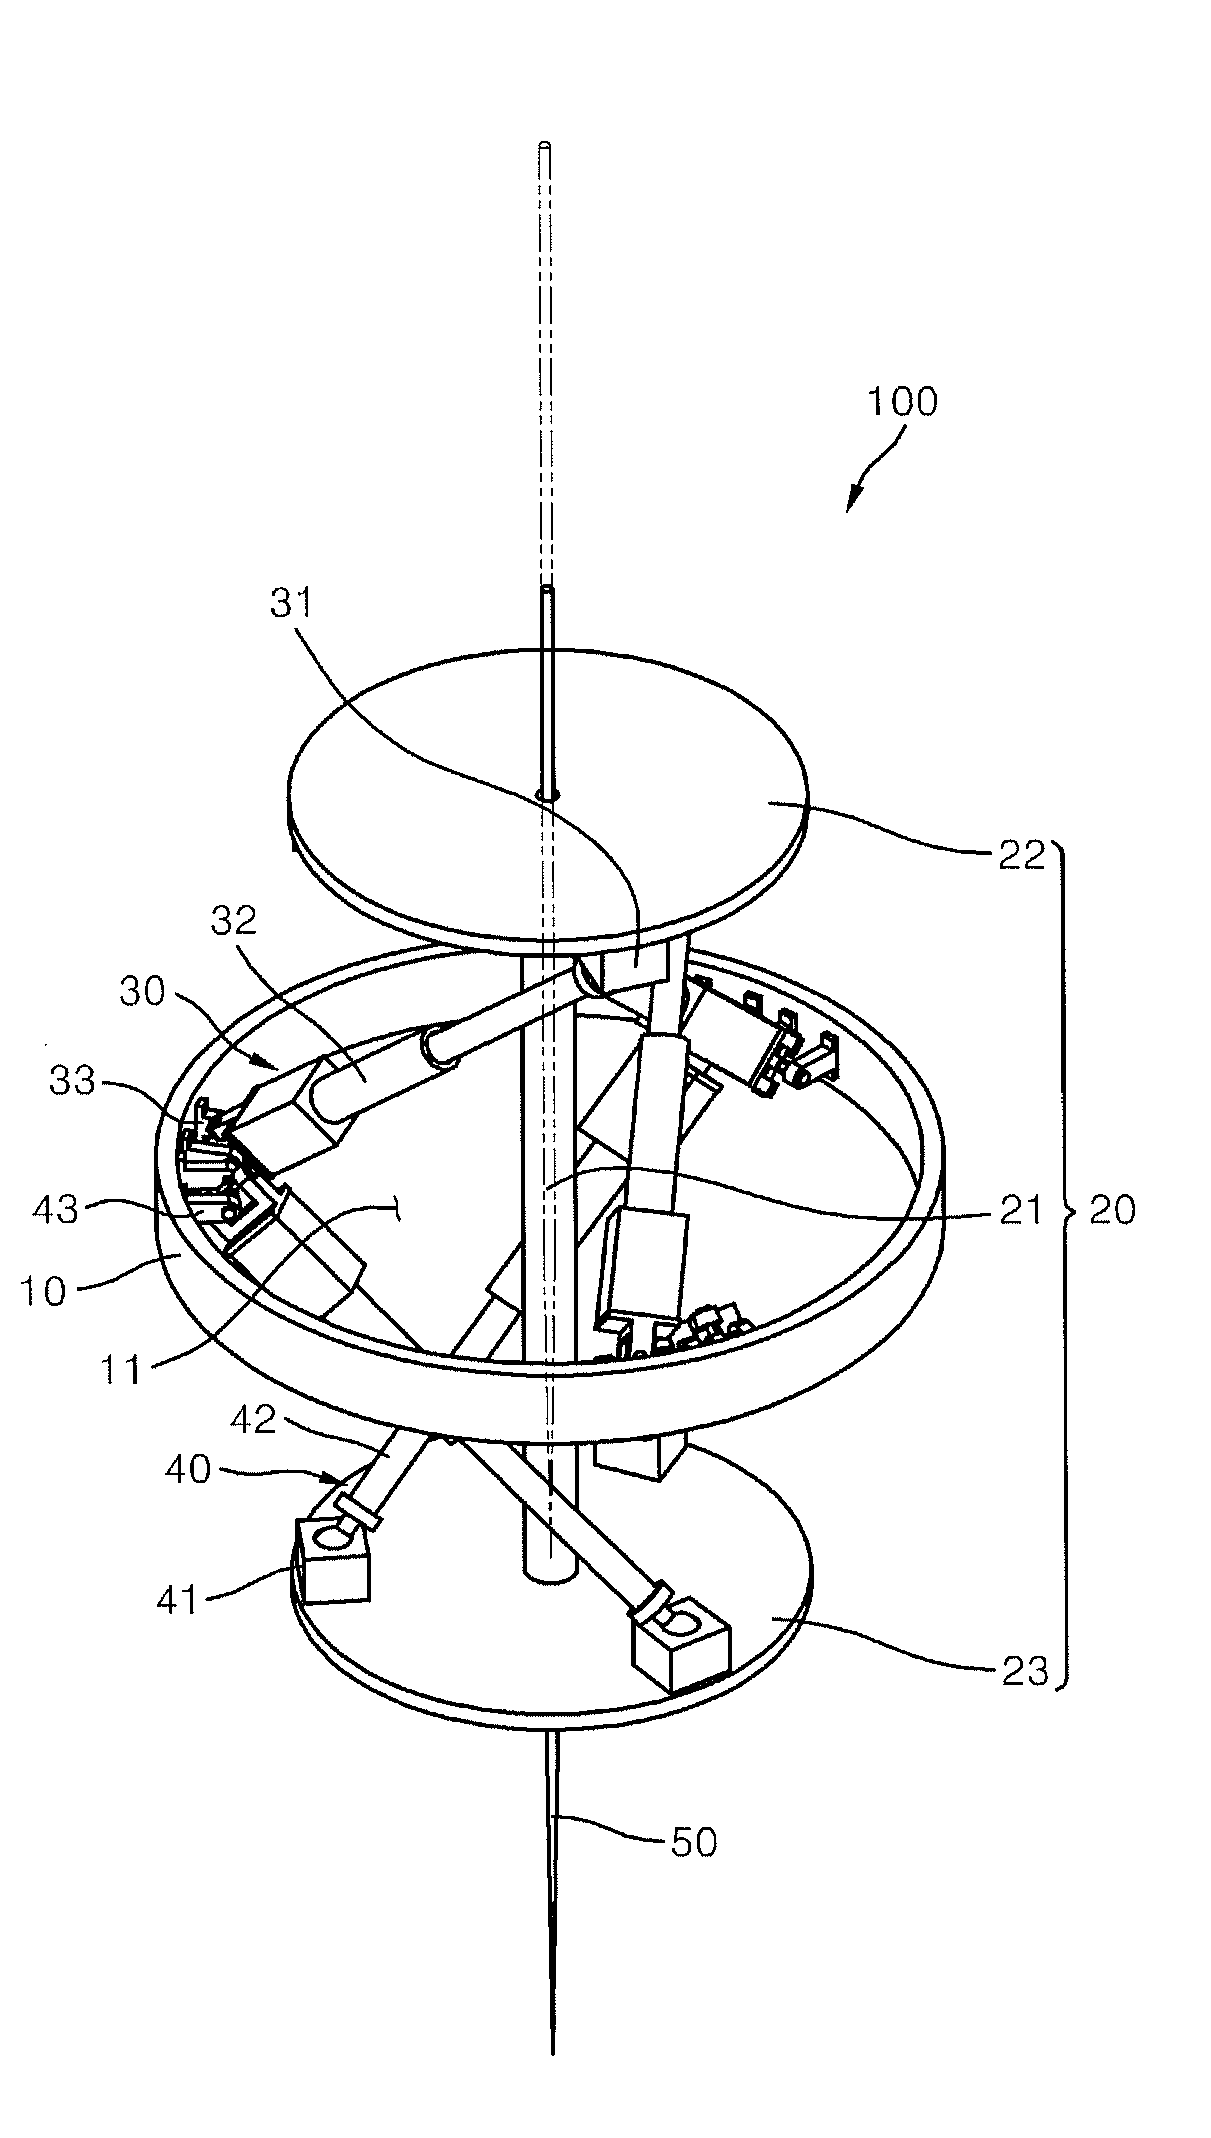 Needle-coupled parallel mechanism